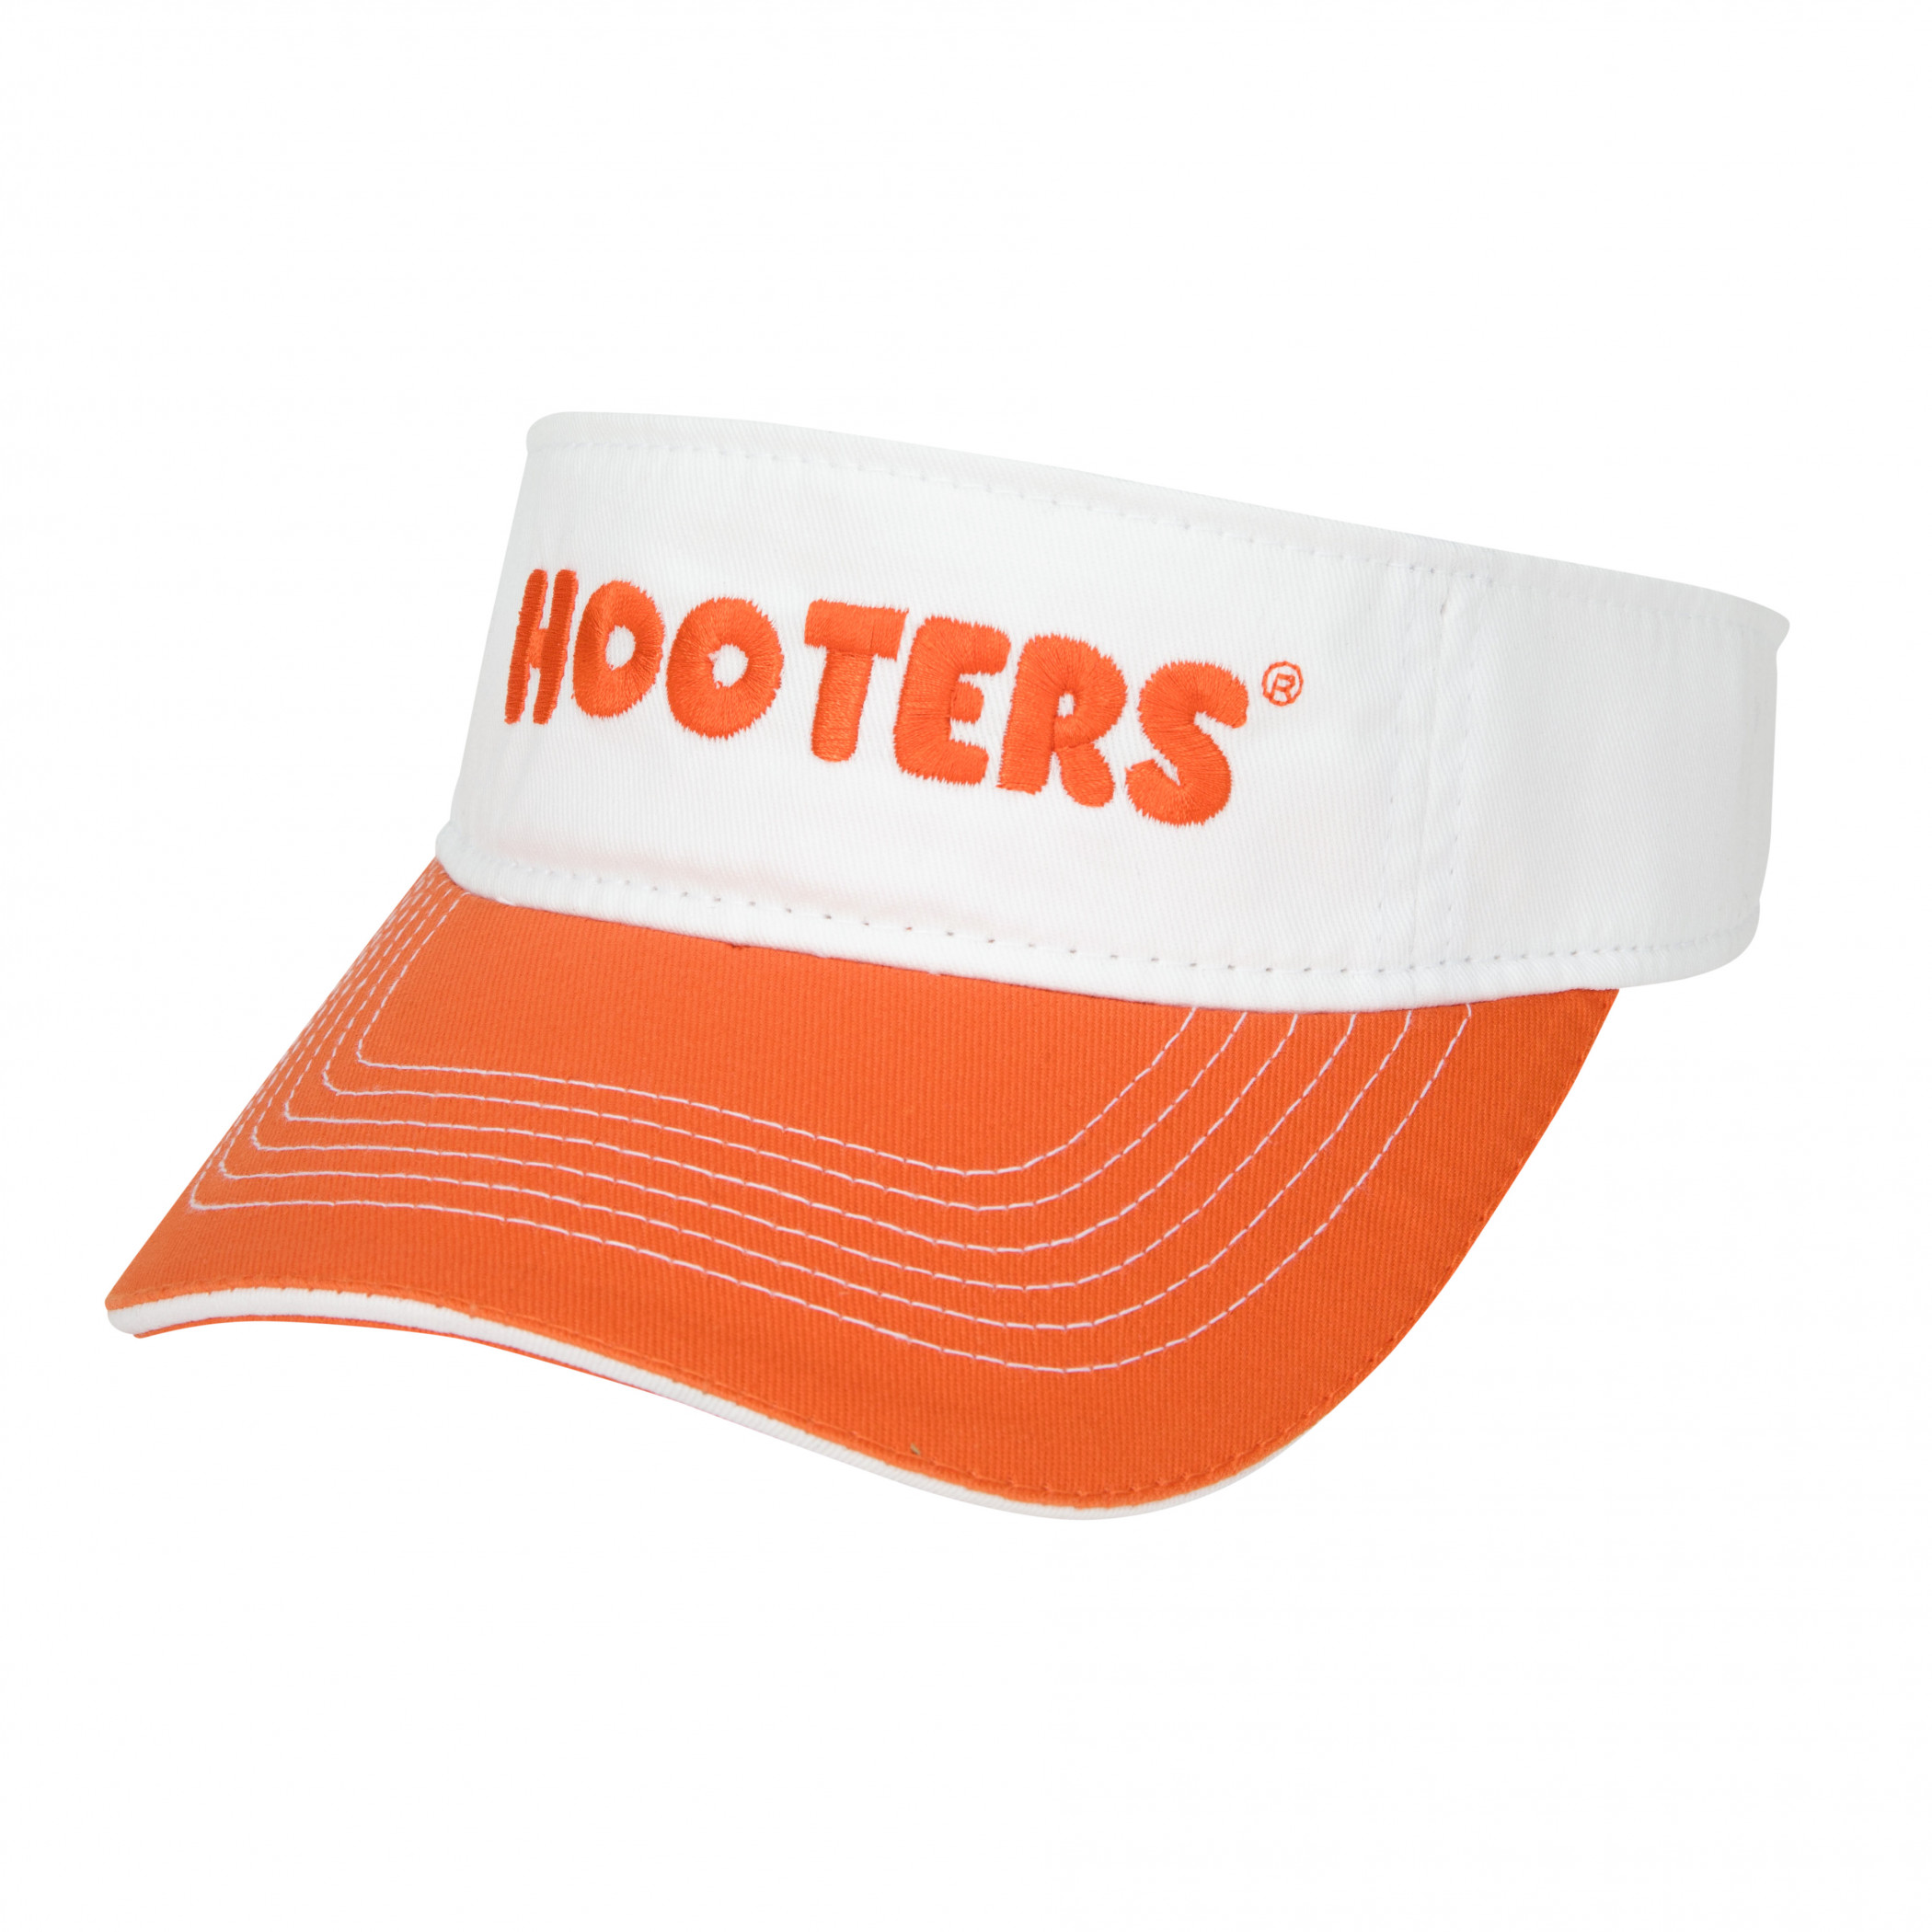 Hooters Simple Logo Golf Visor